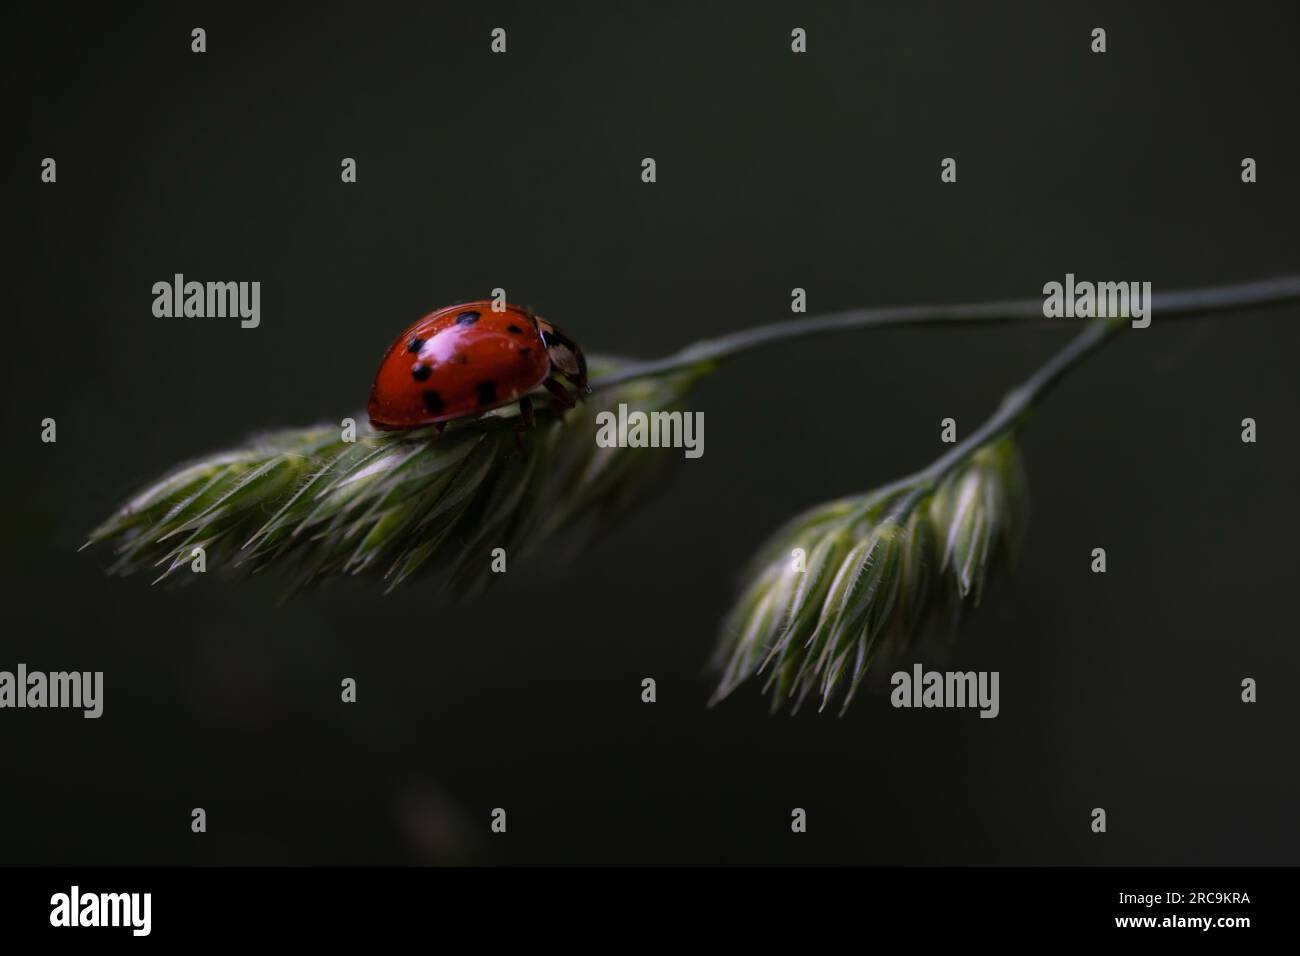 Close up of a ladybug on the Orchard grass (Dactylis glomerata). Dark background. Selective focus. Stock Photo